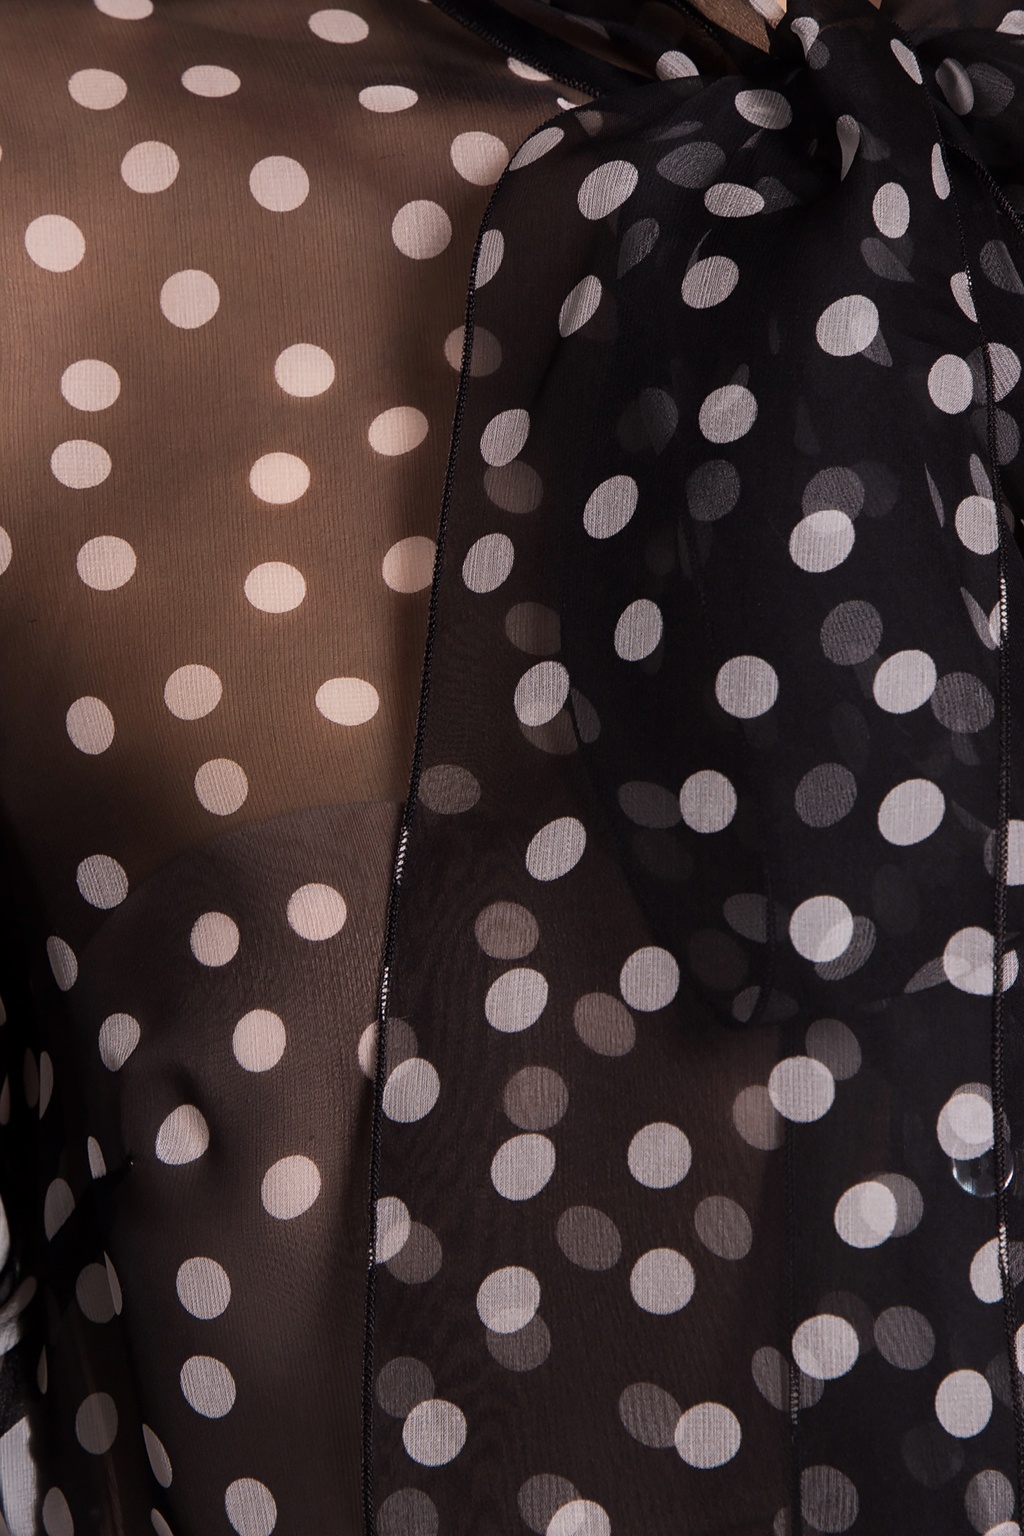 Black Sheer polka dot shirt Dolce & Gabbana - Vitkac France